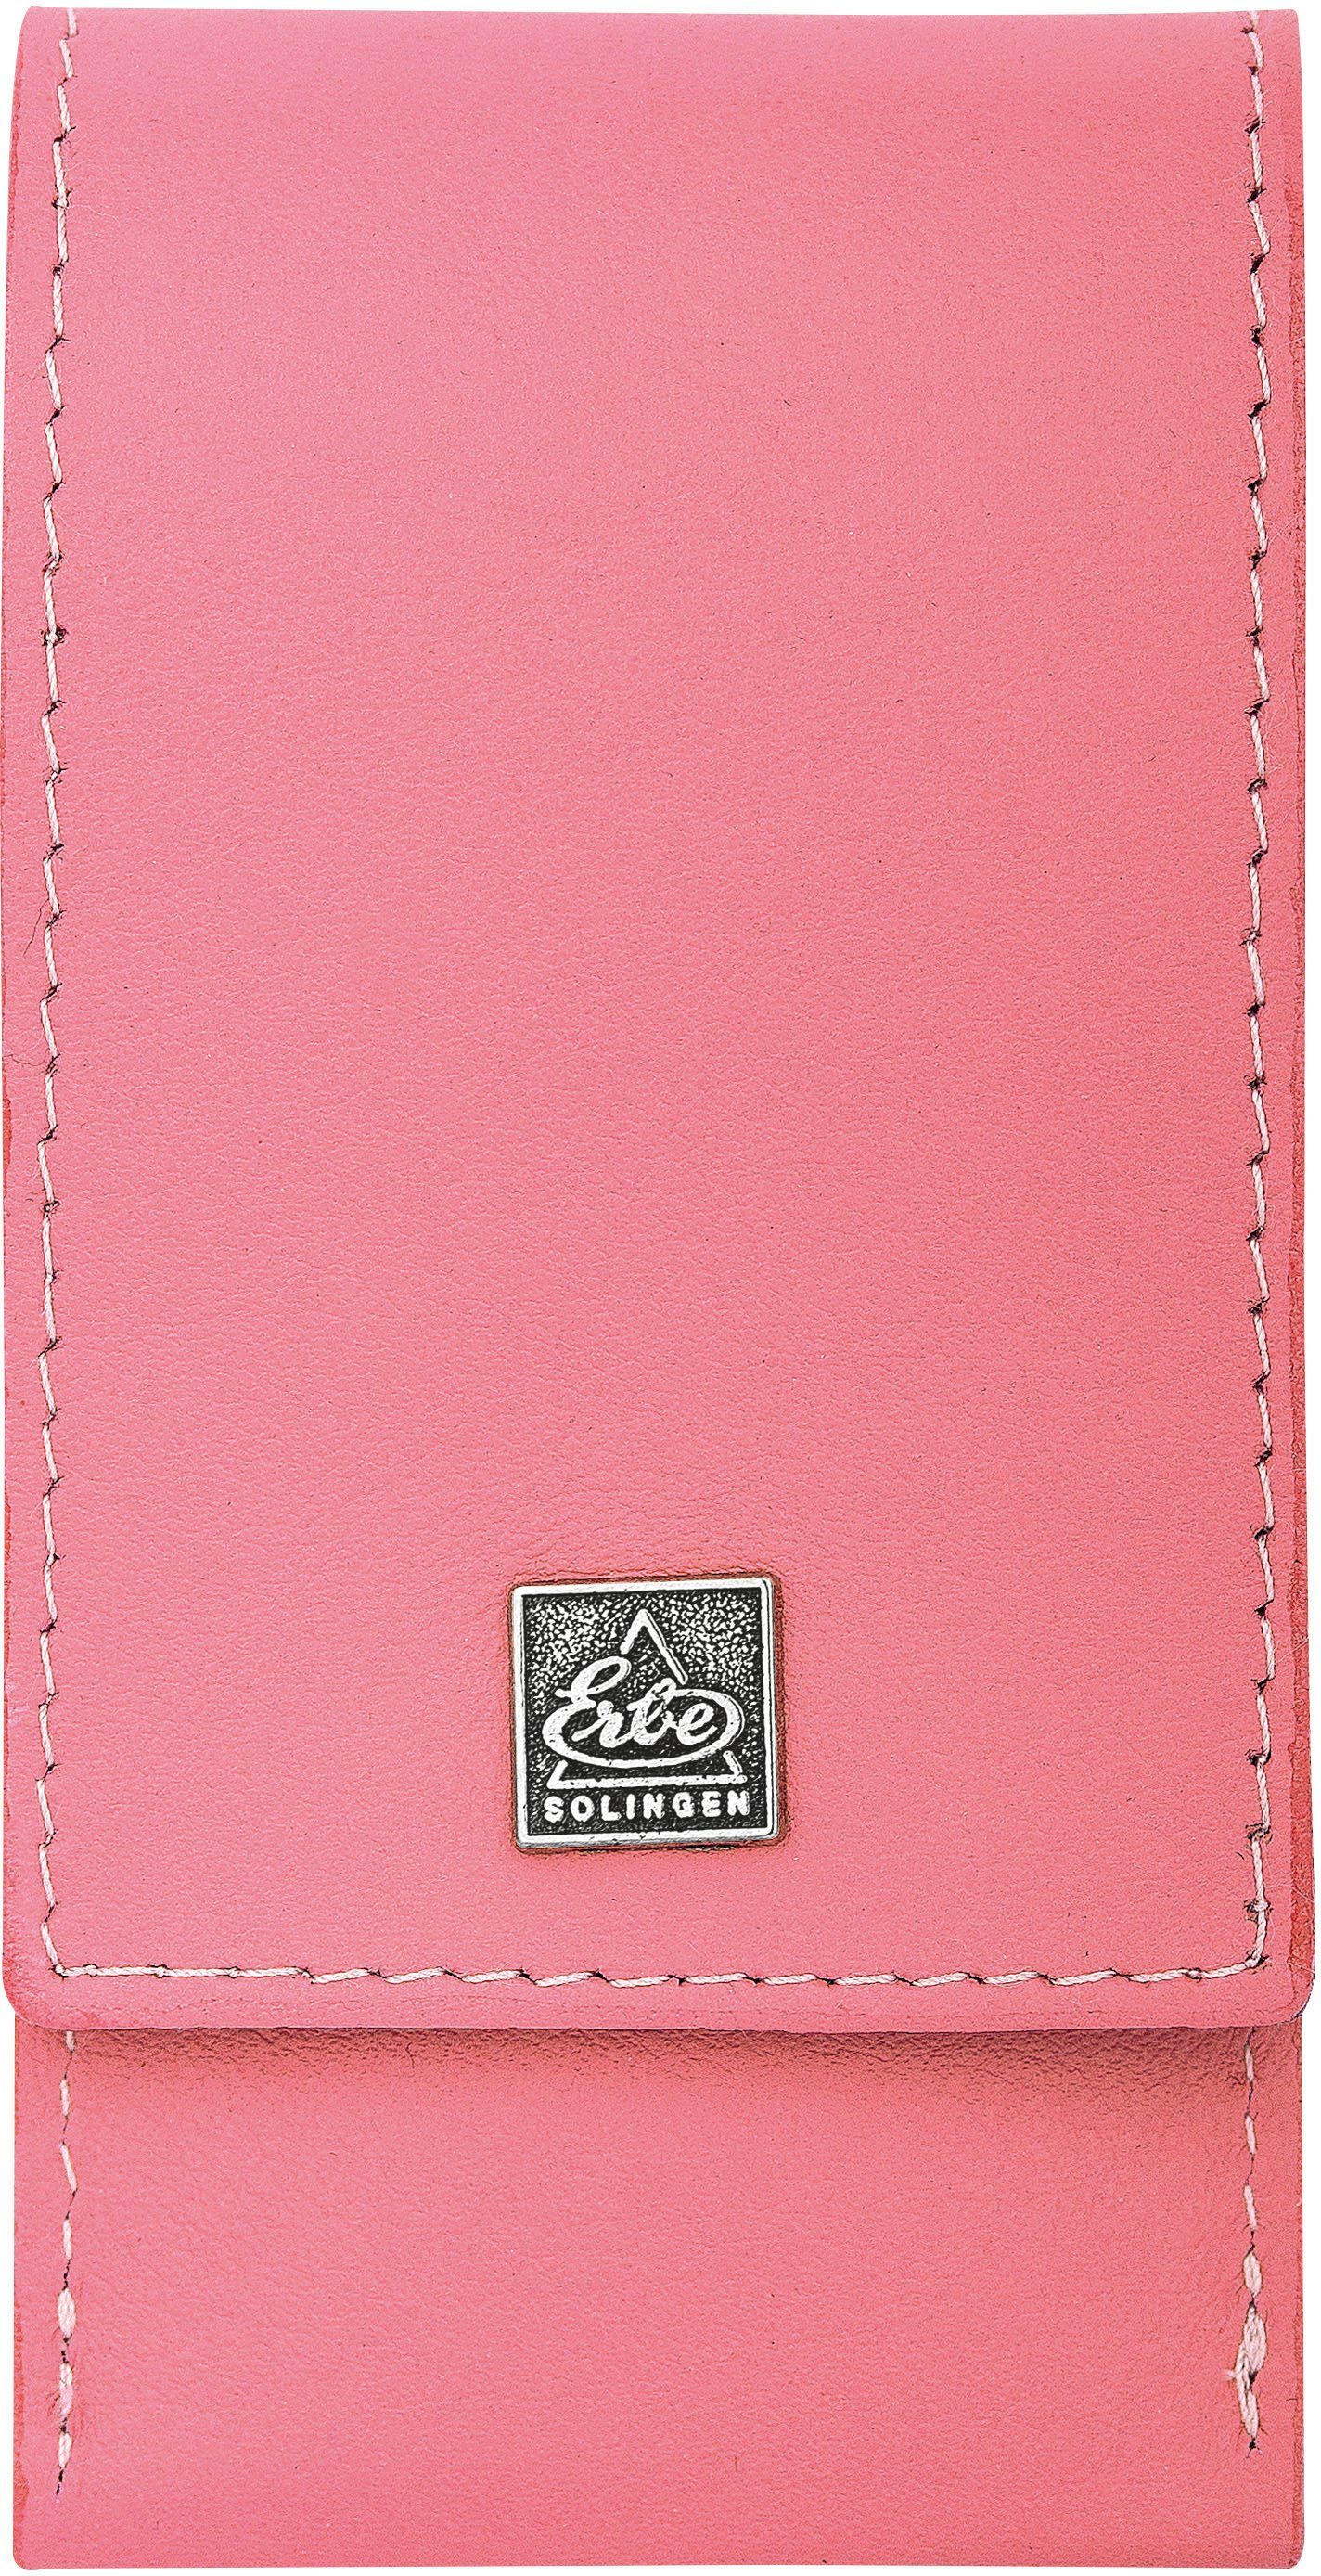 ERBE Maniküre-Etui ERBE Maniküre Set 3 Serie tlg. Taschen-Etui "Colour", pink, 3-tlg